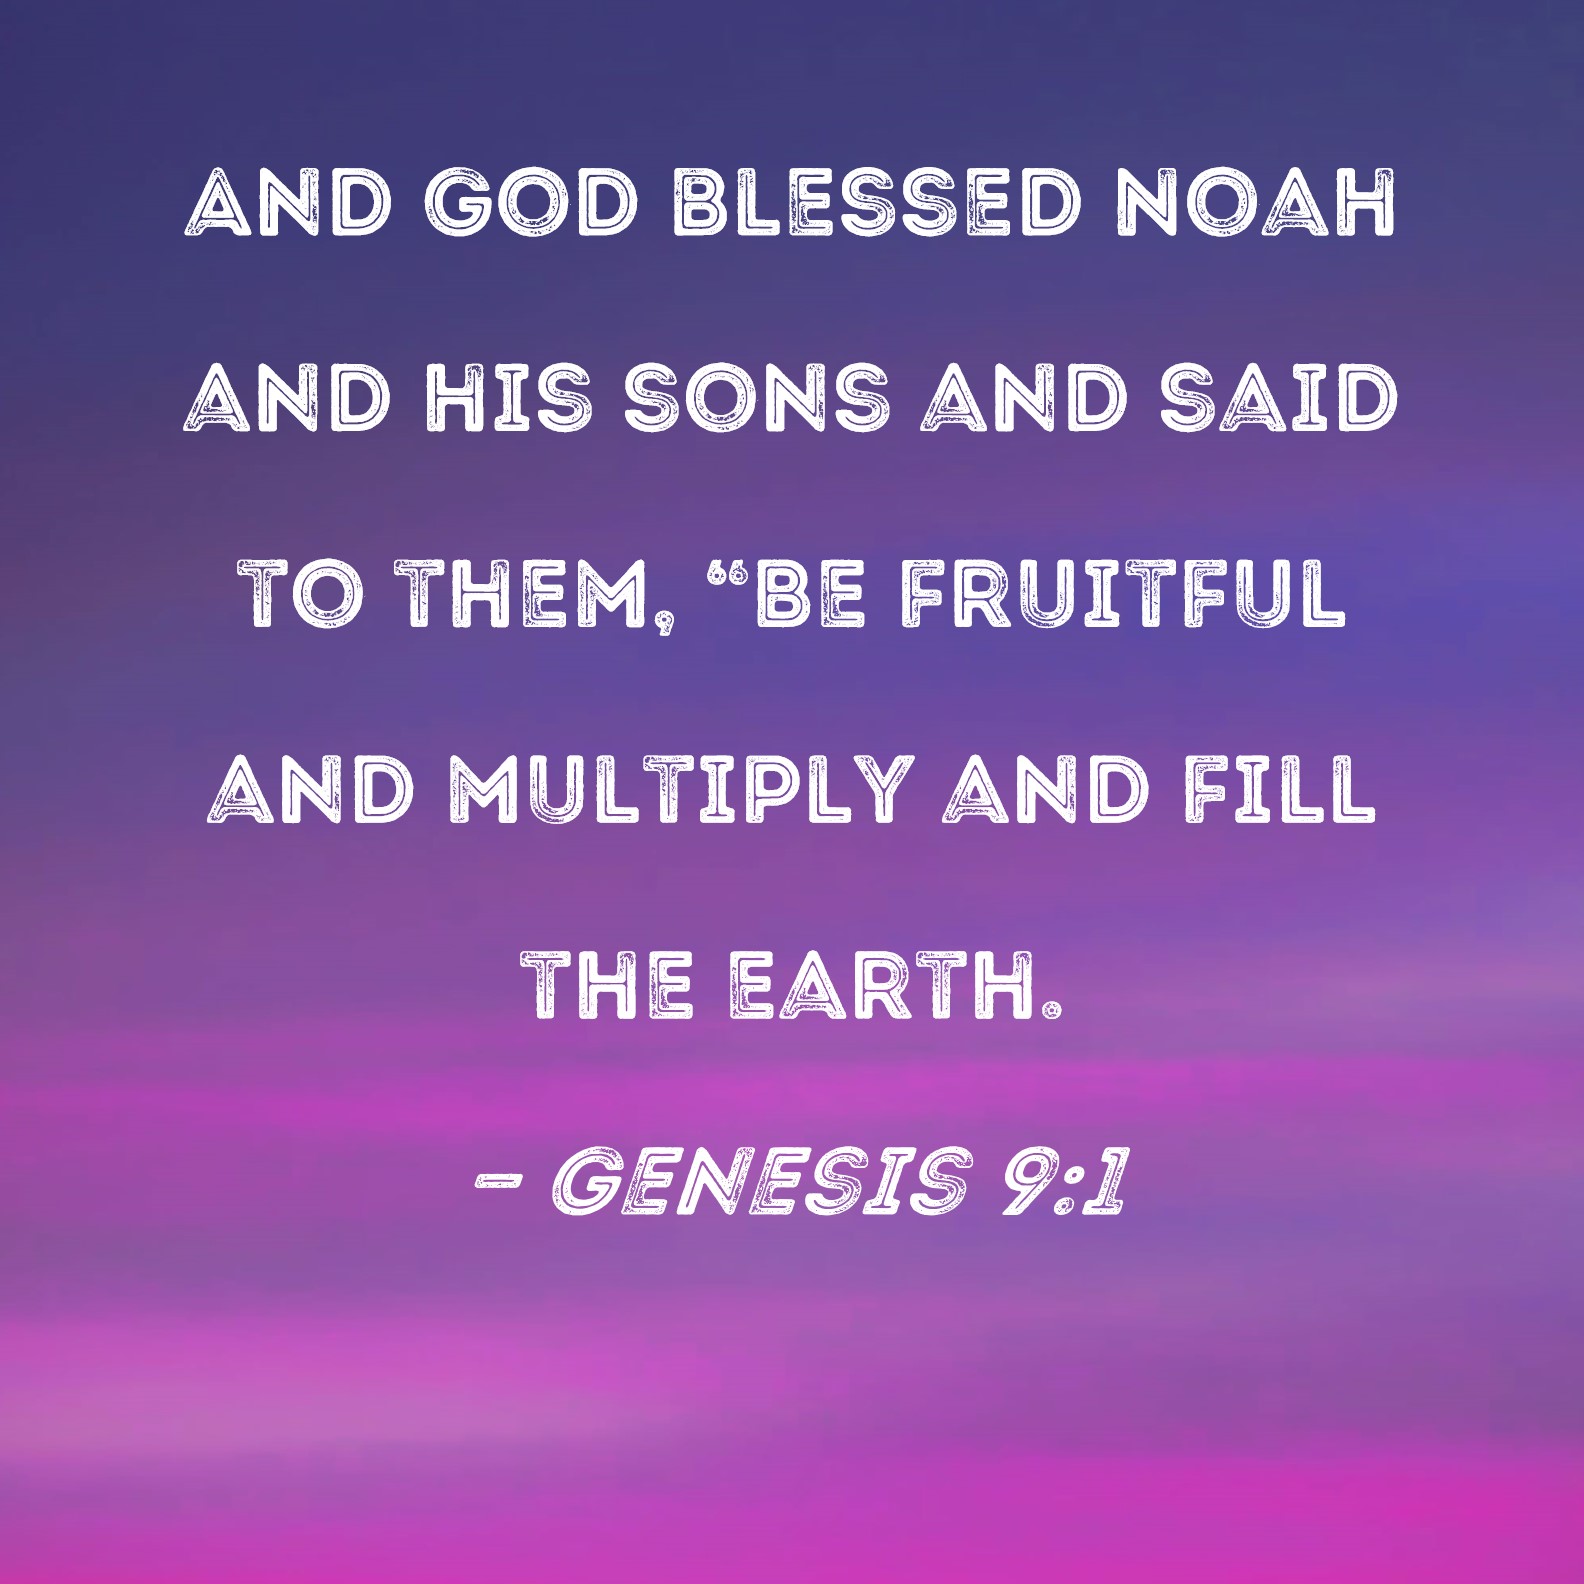 Bible: Genesis 9:3 - Prayables